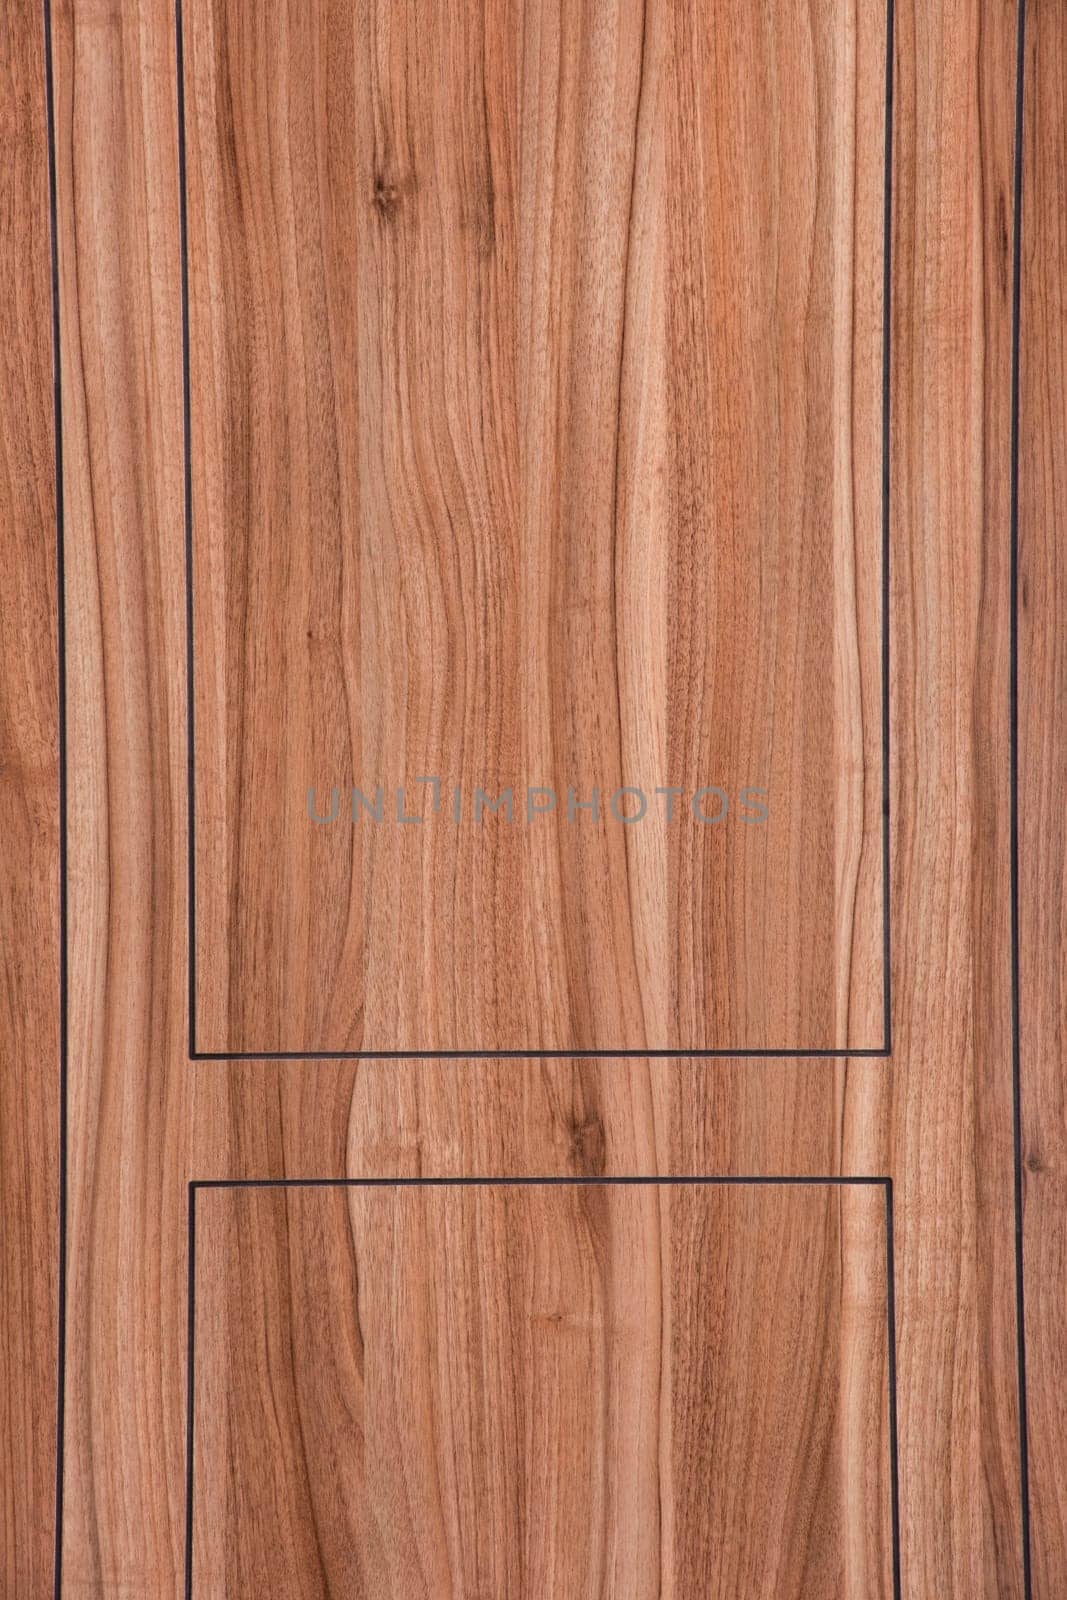 Wooden Floor by emirkoo